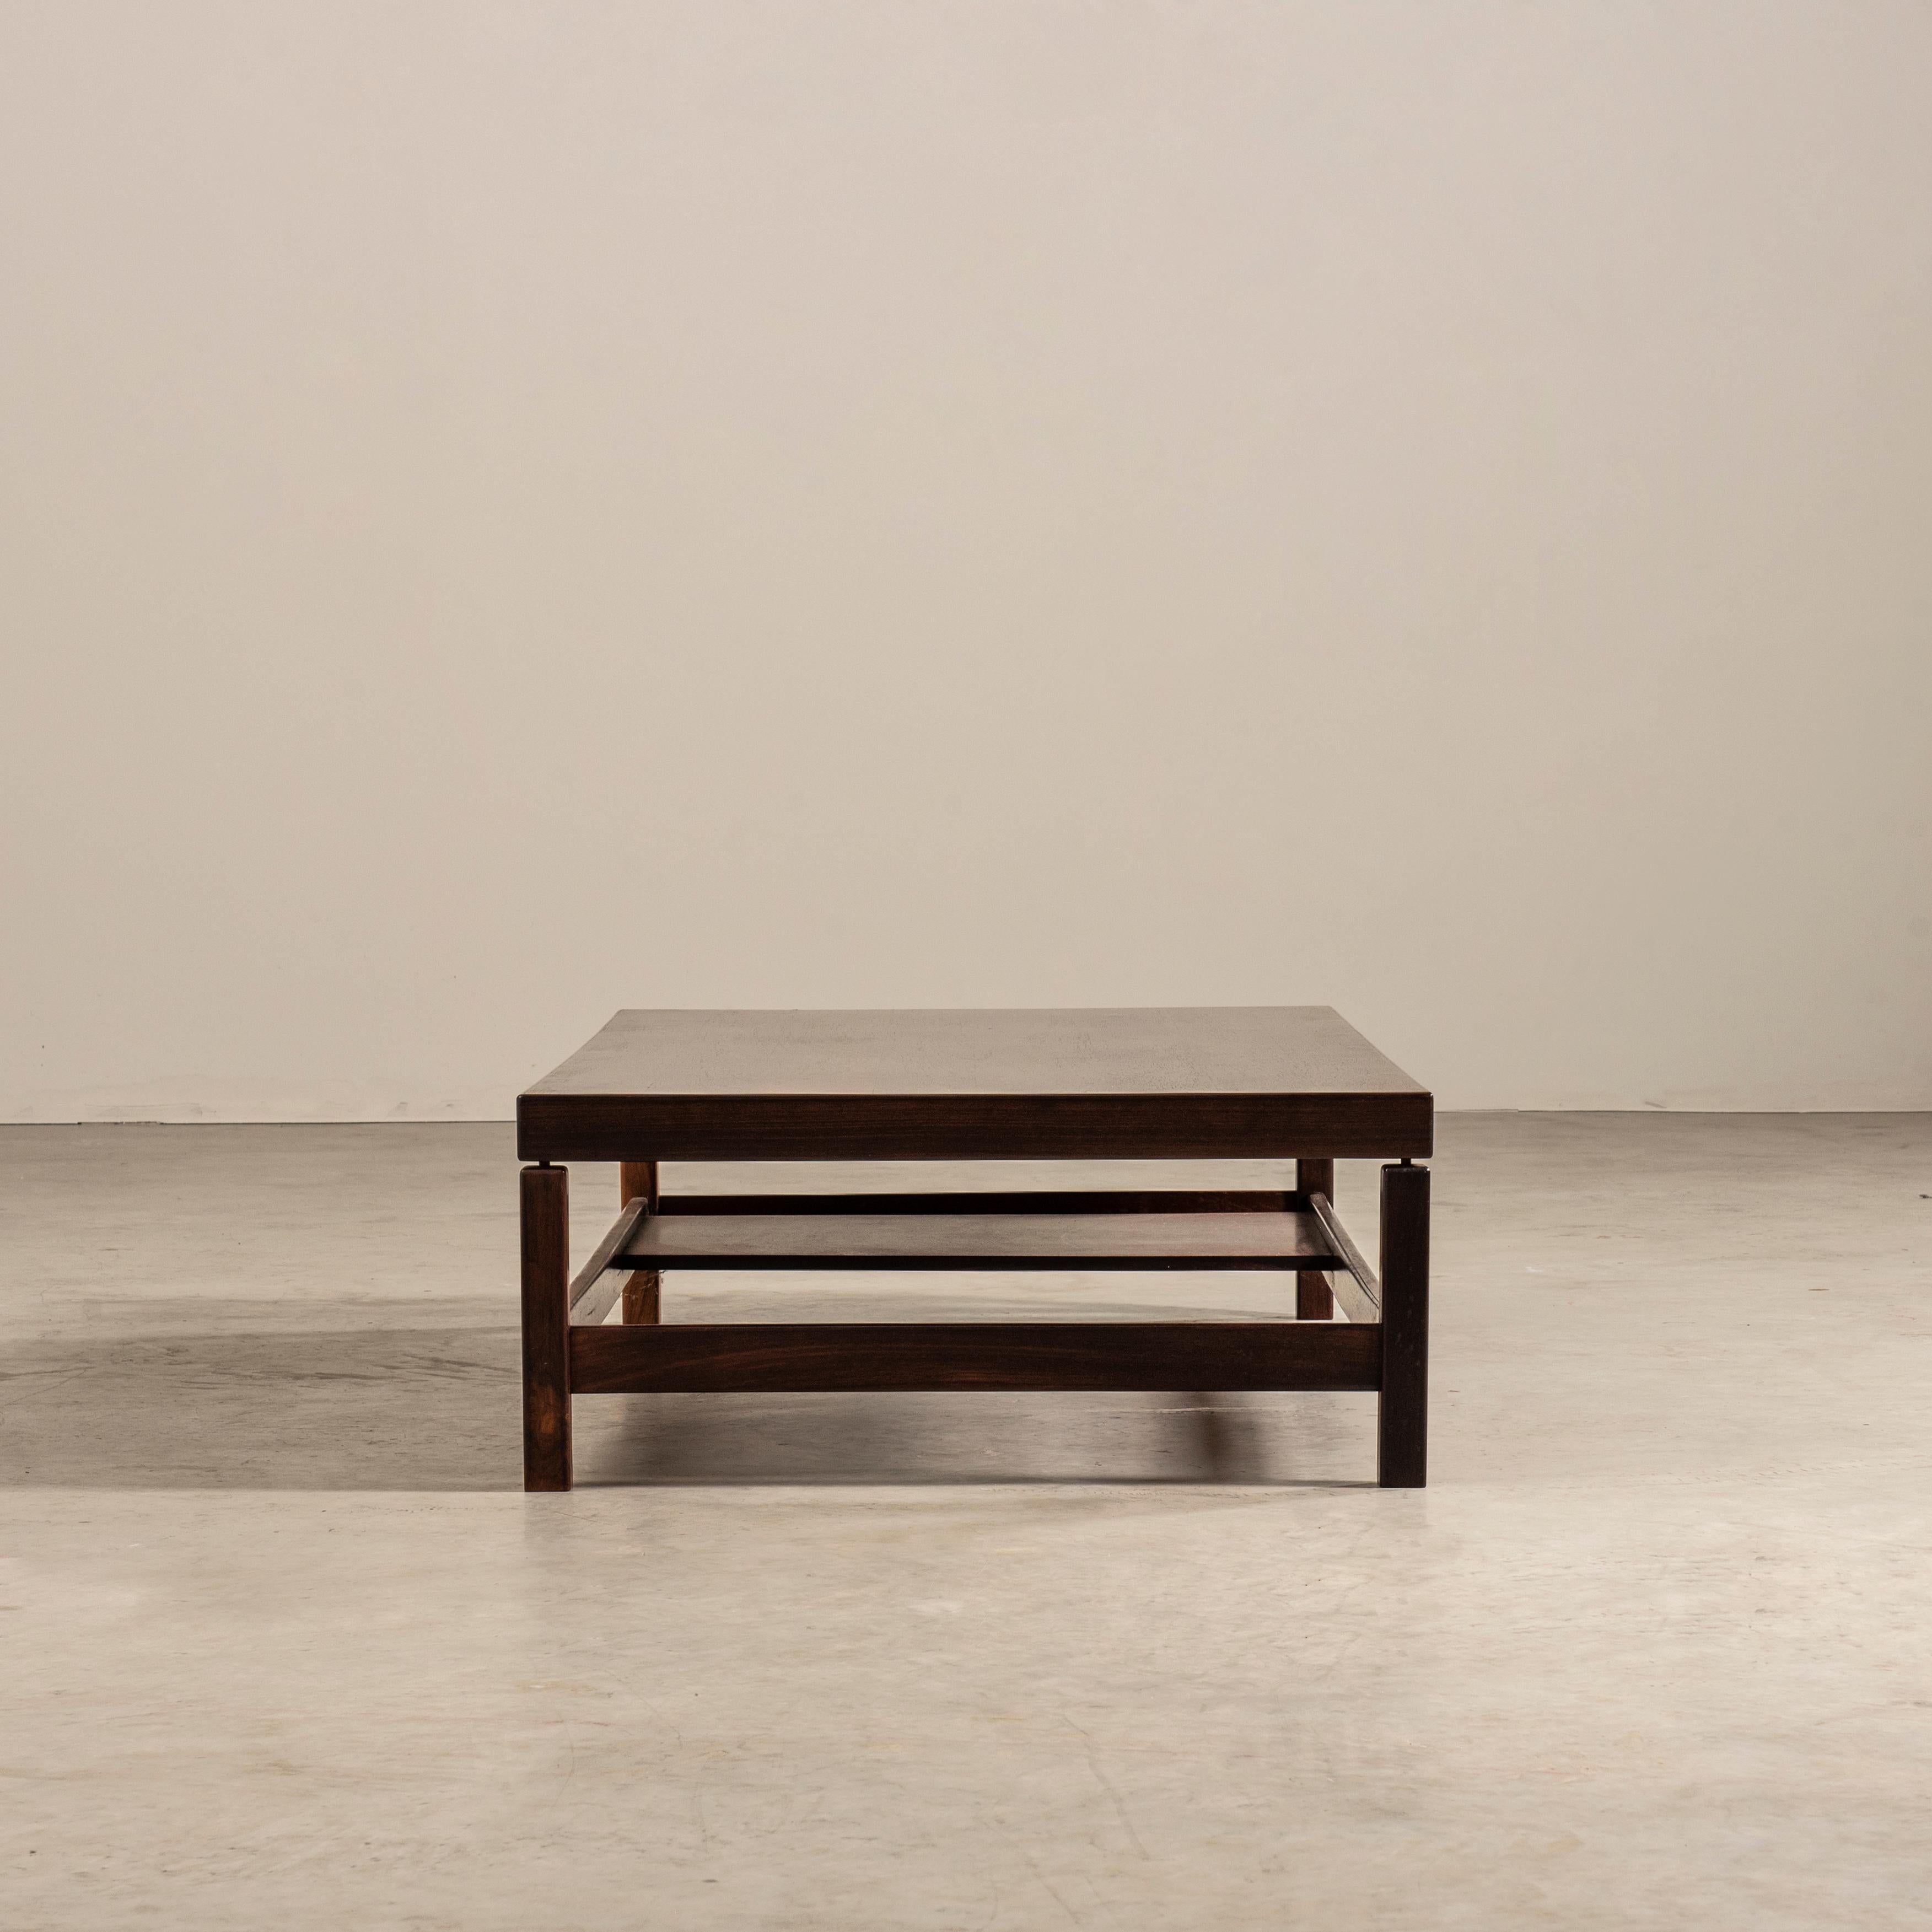 Minimalist Rectangular Coffee Table in Solid Wood, Brazilian Mid-century Modern  For Sale 4